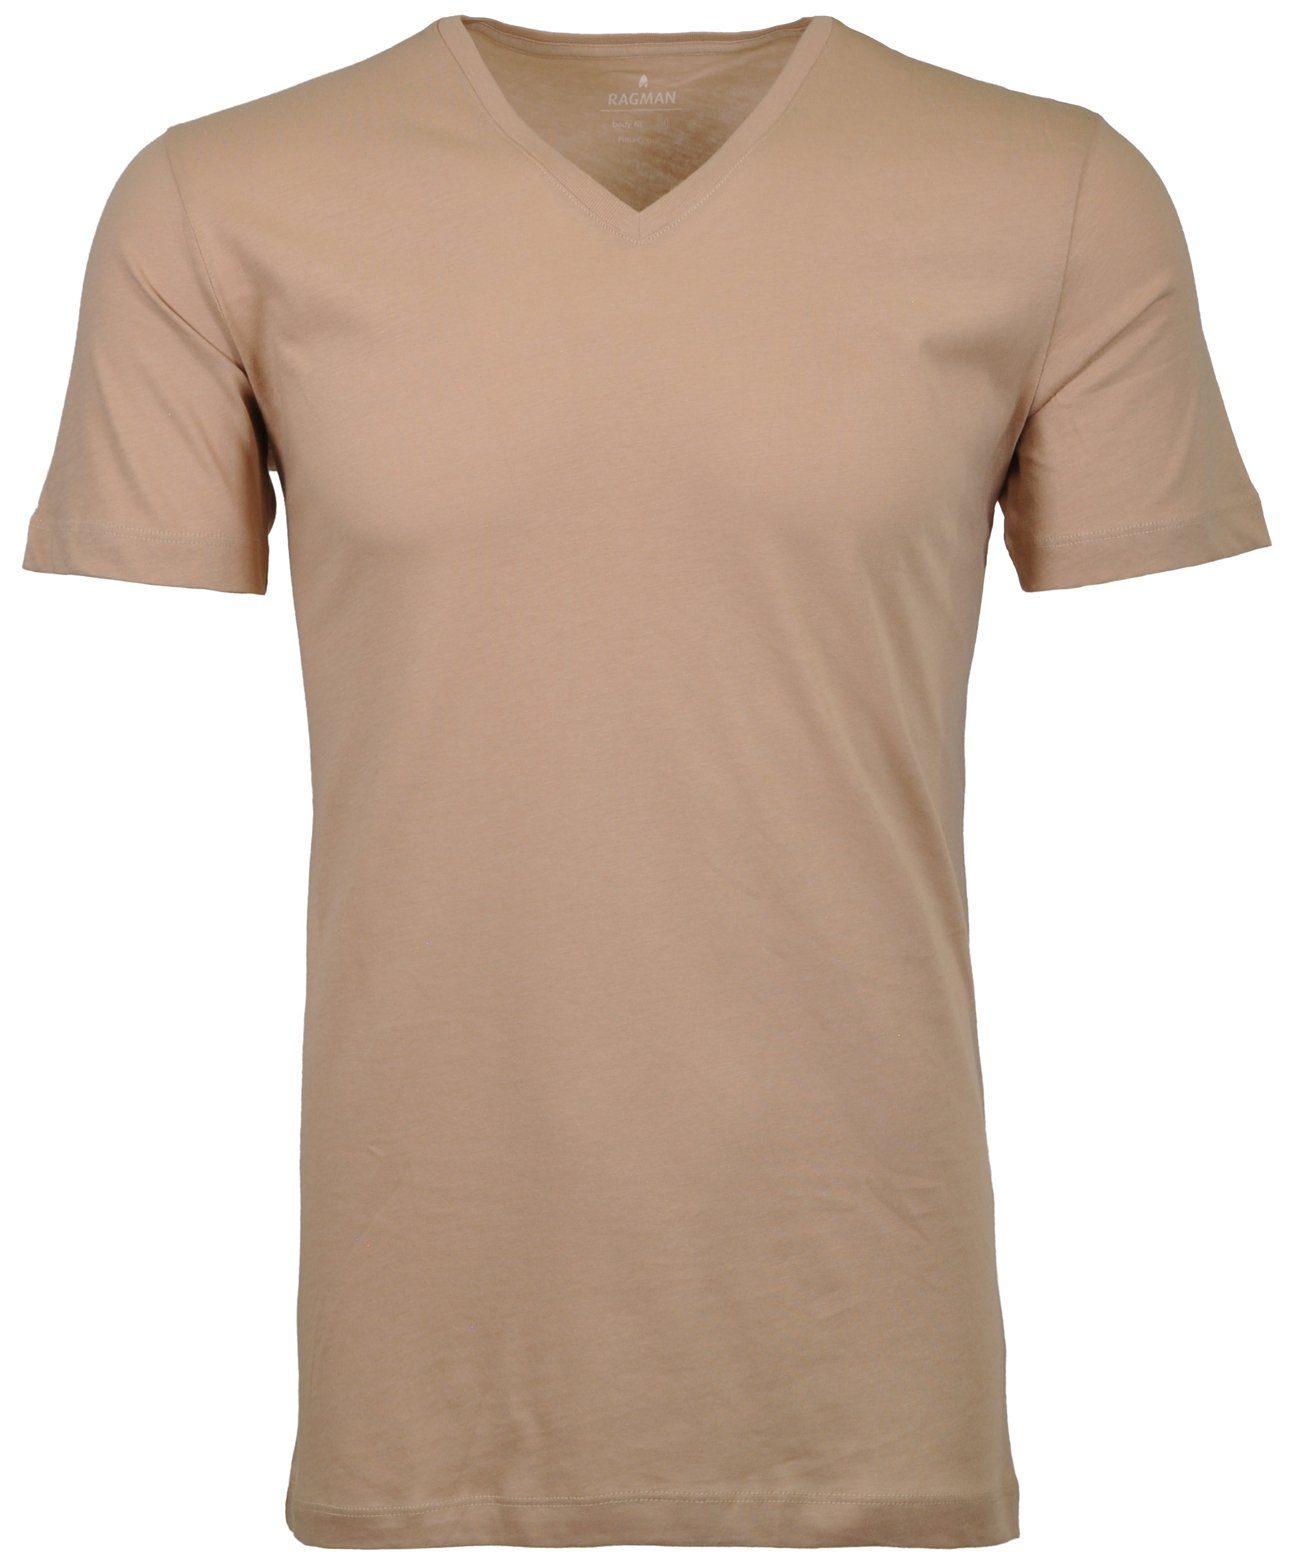 RAGMAN T-Shirt (Packung) Light Skin-086 | T-Shirts